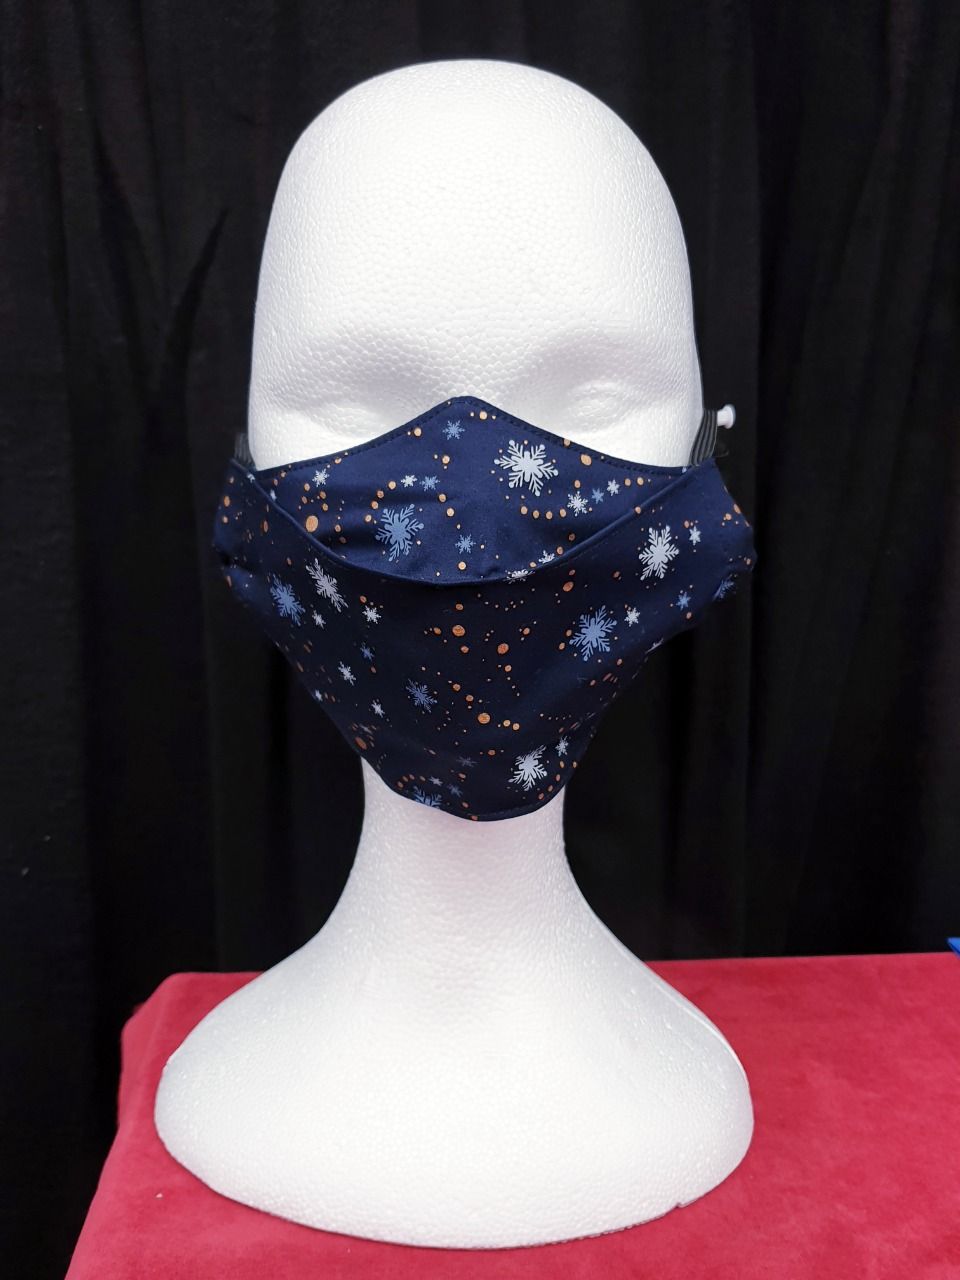 Masque de protection EAP (écran anti-postillons) "les étoiles en bleu"